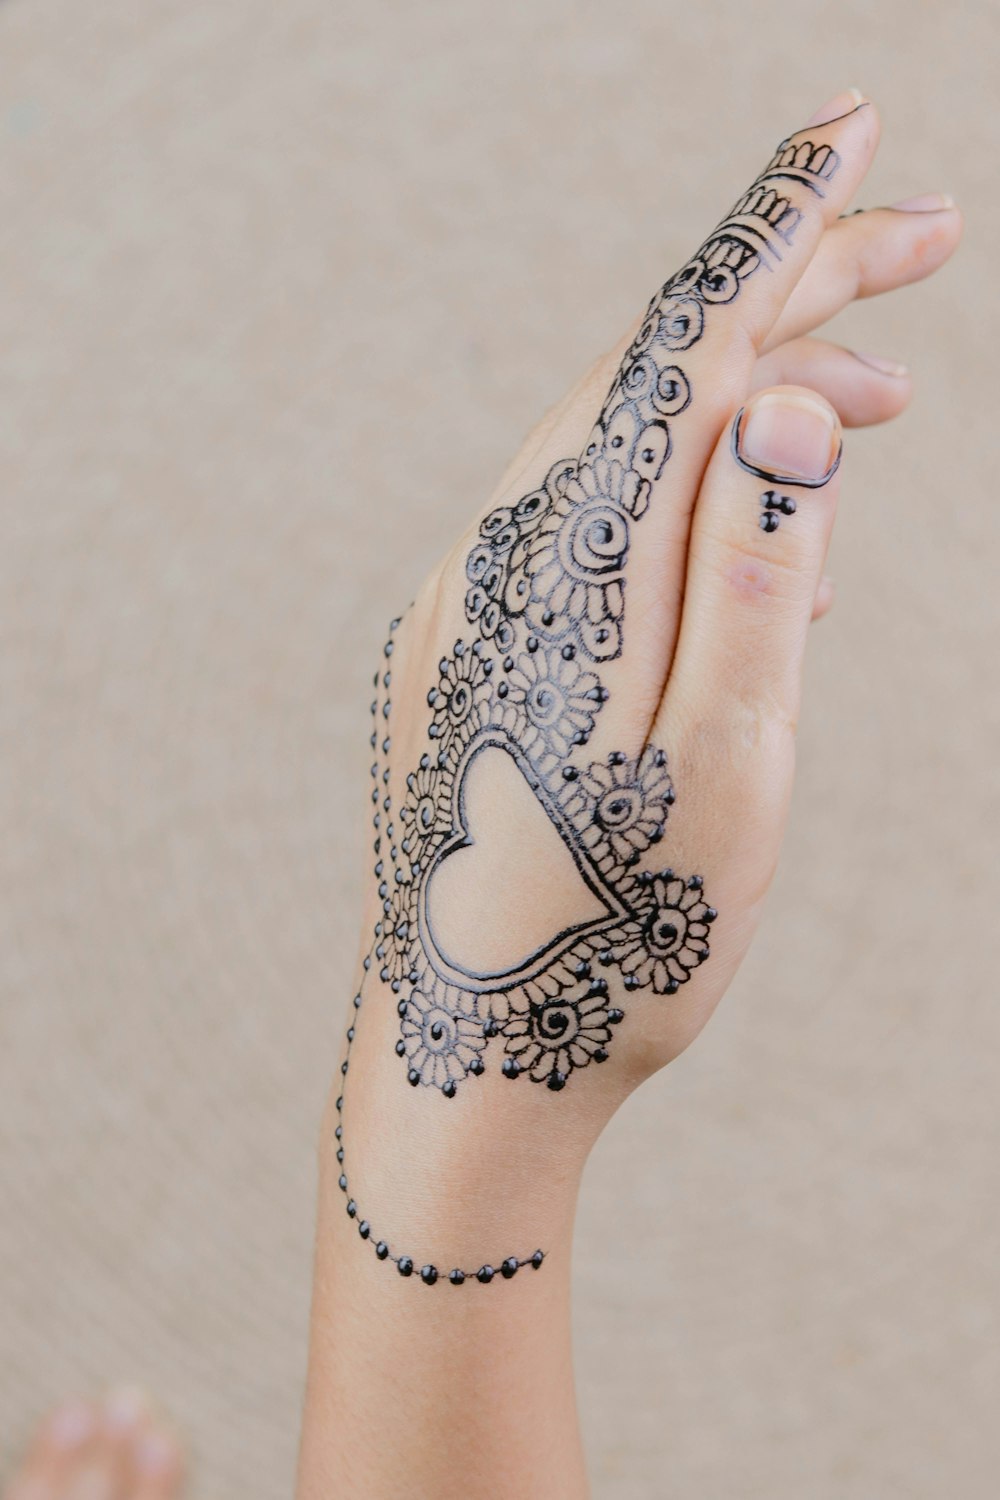 Flower hand tattoo photo – Free Grey Image on Unsplash